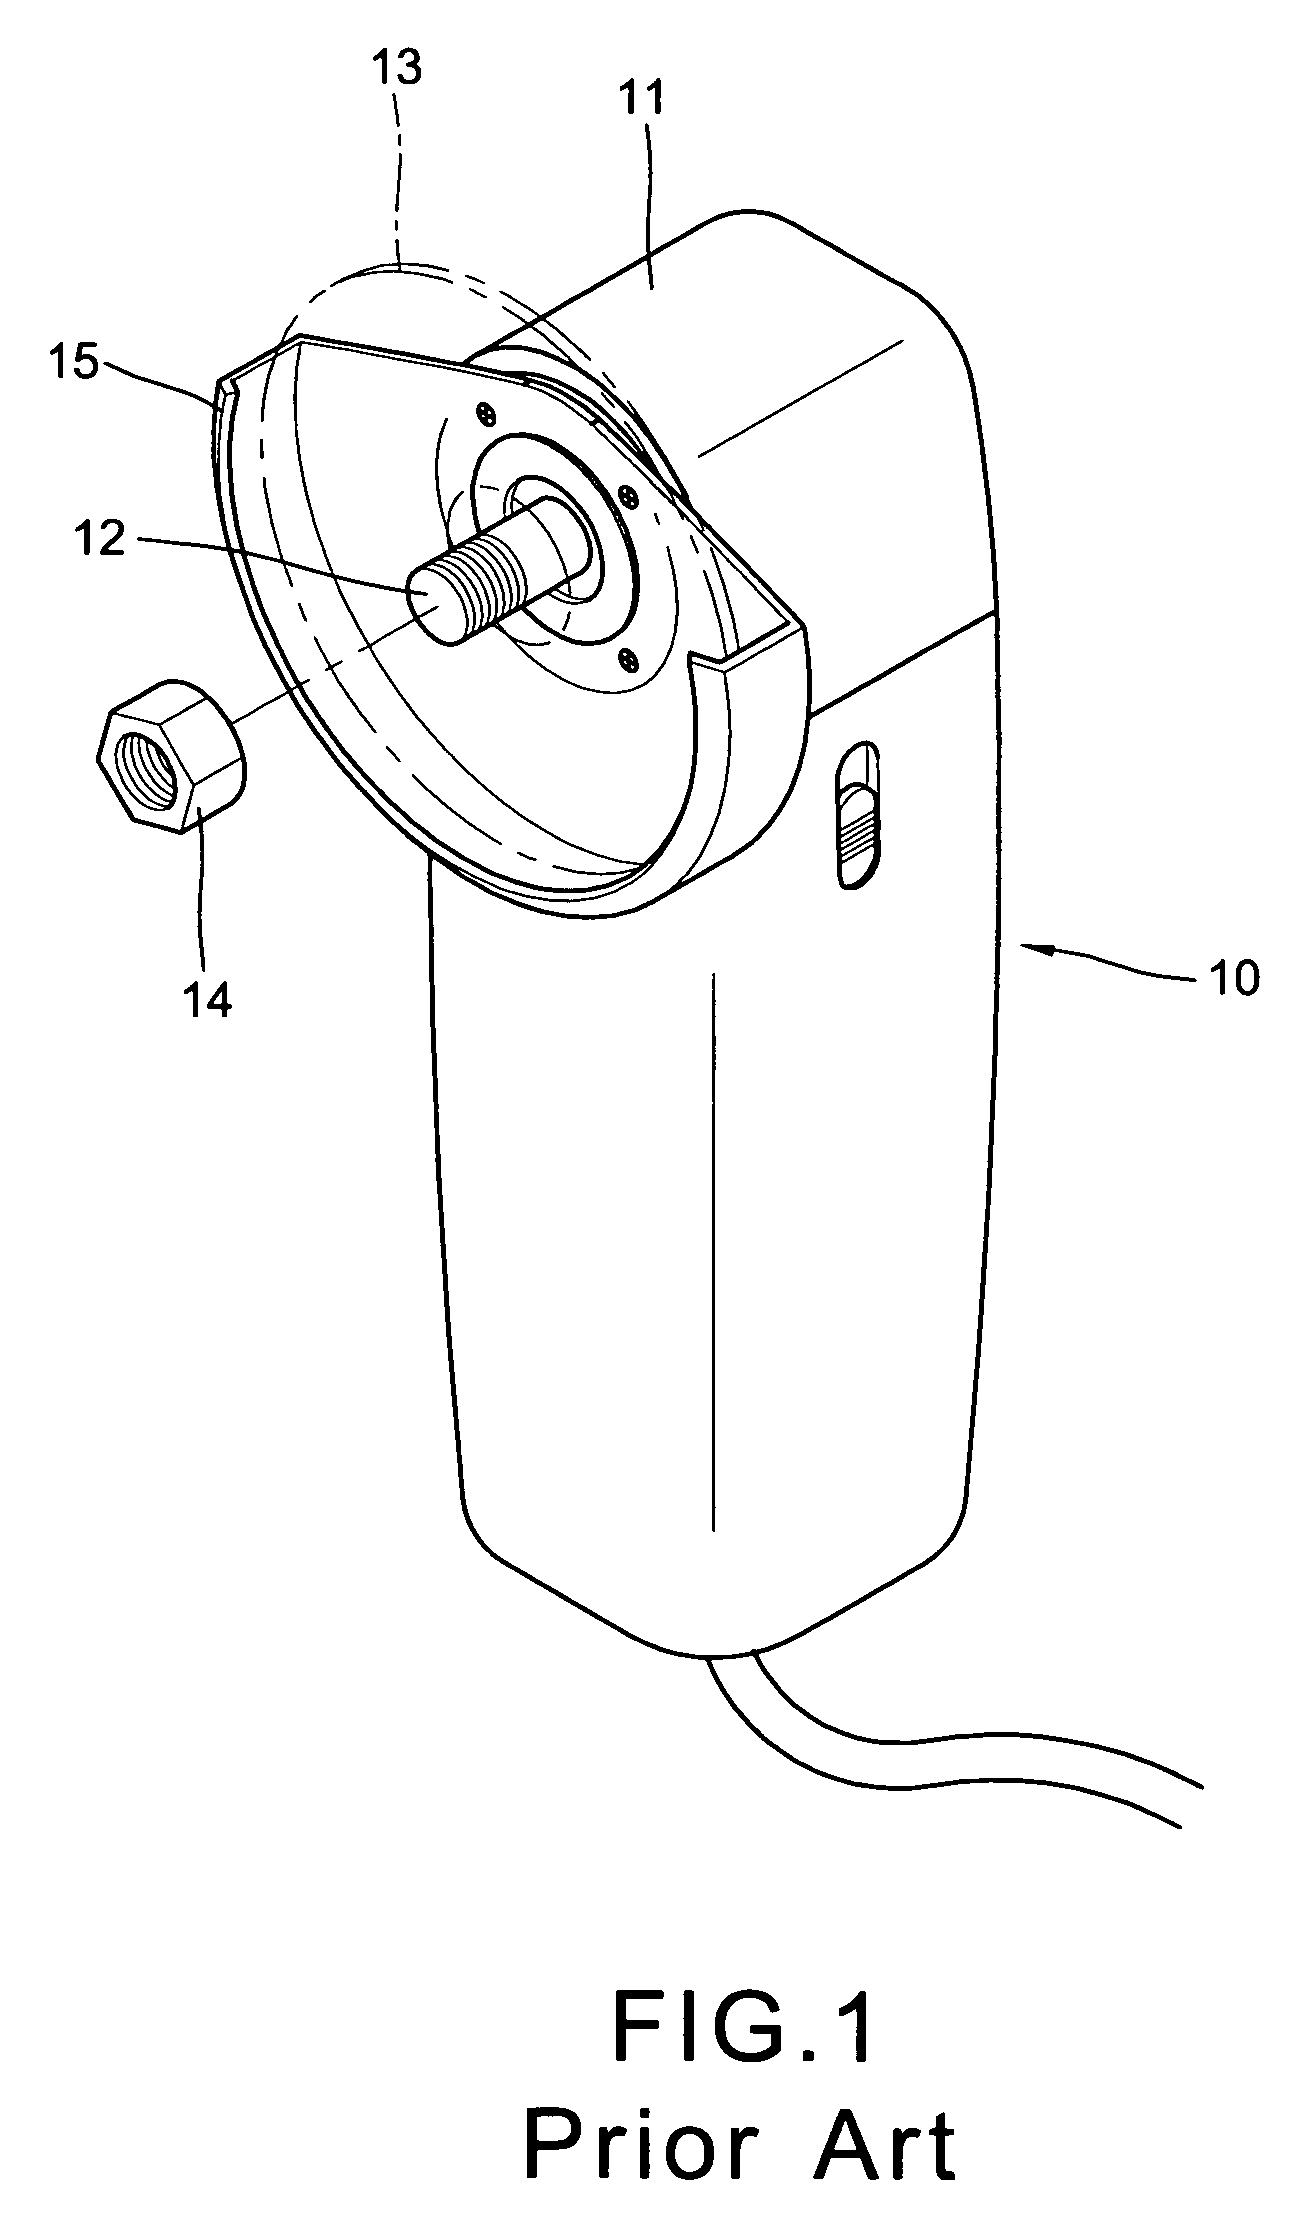 Hand-operated circular saw having blade cutting depth adjustment device